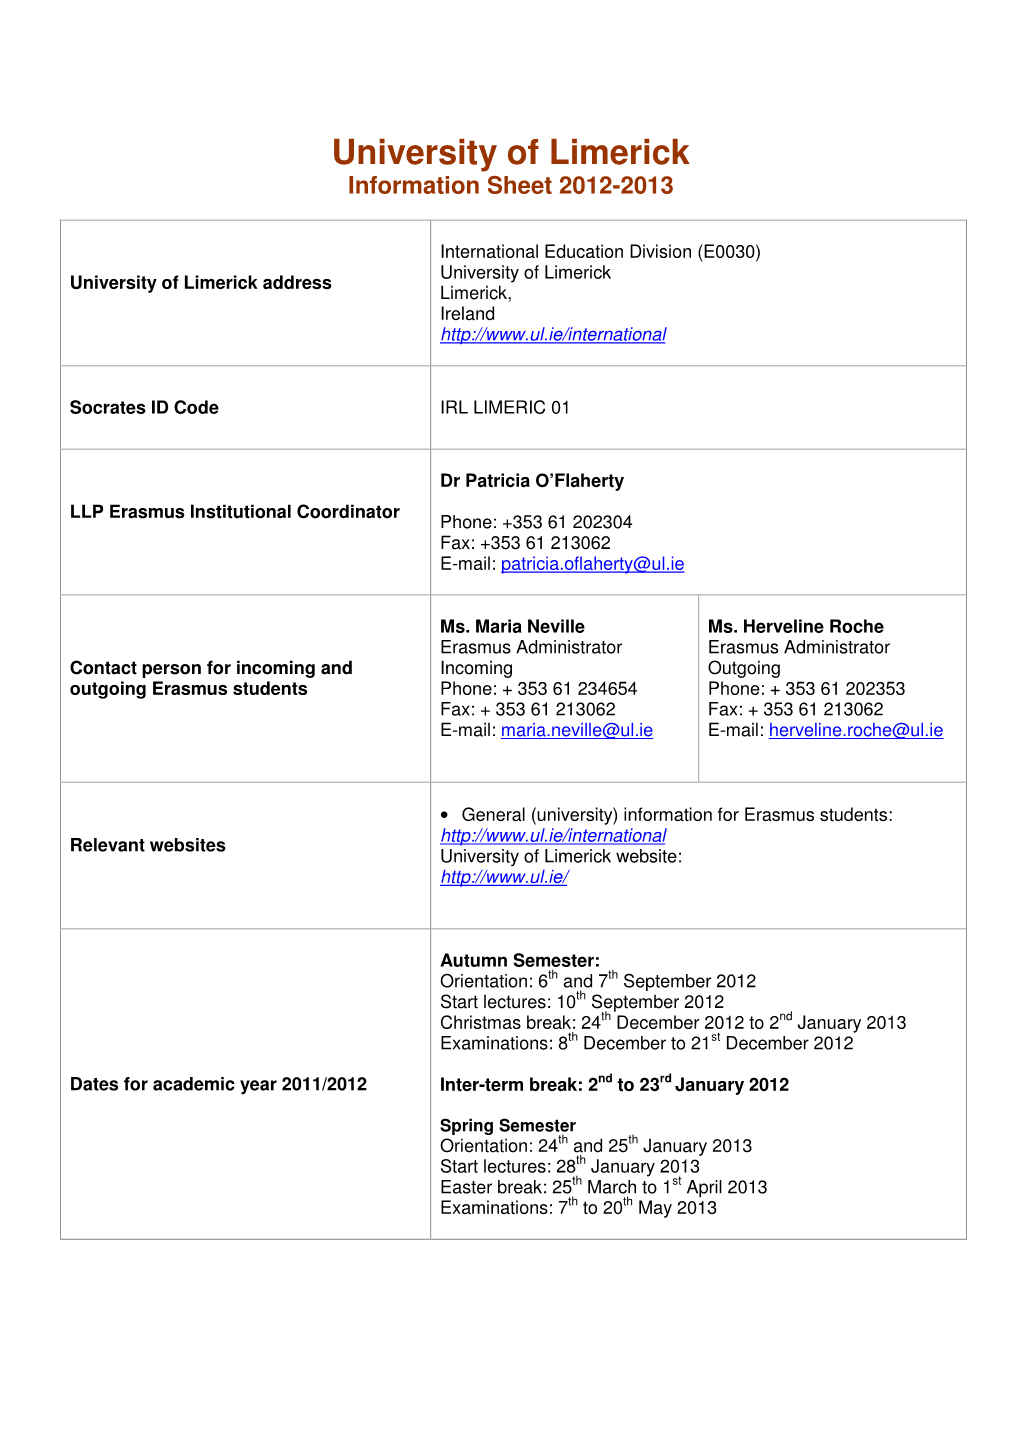 University of Limerick Information Sheet 2012-2013